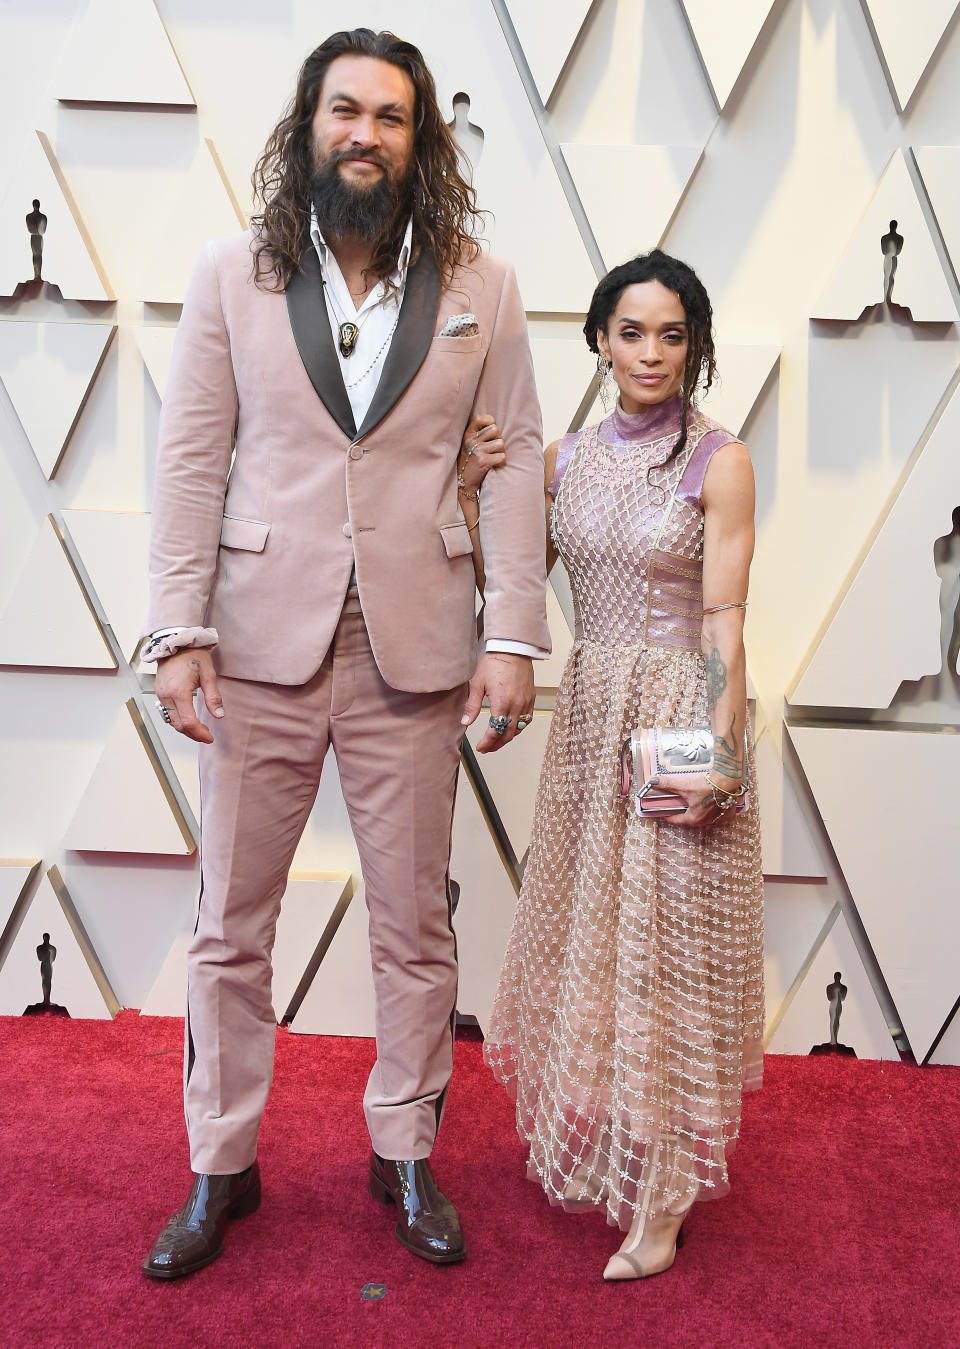 Jason Momoa and Lisa Bonet at the Oscars 2019